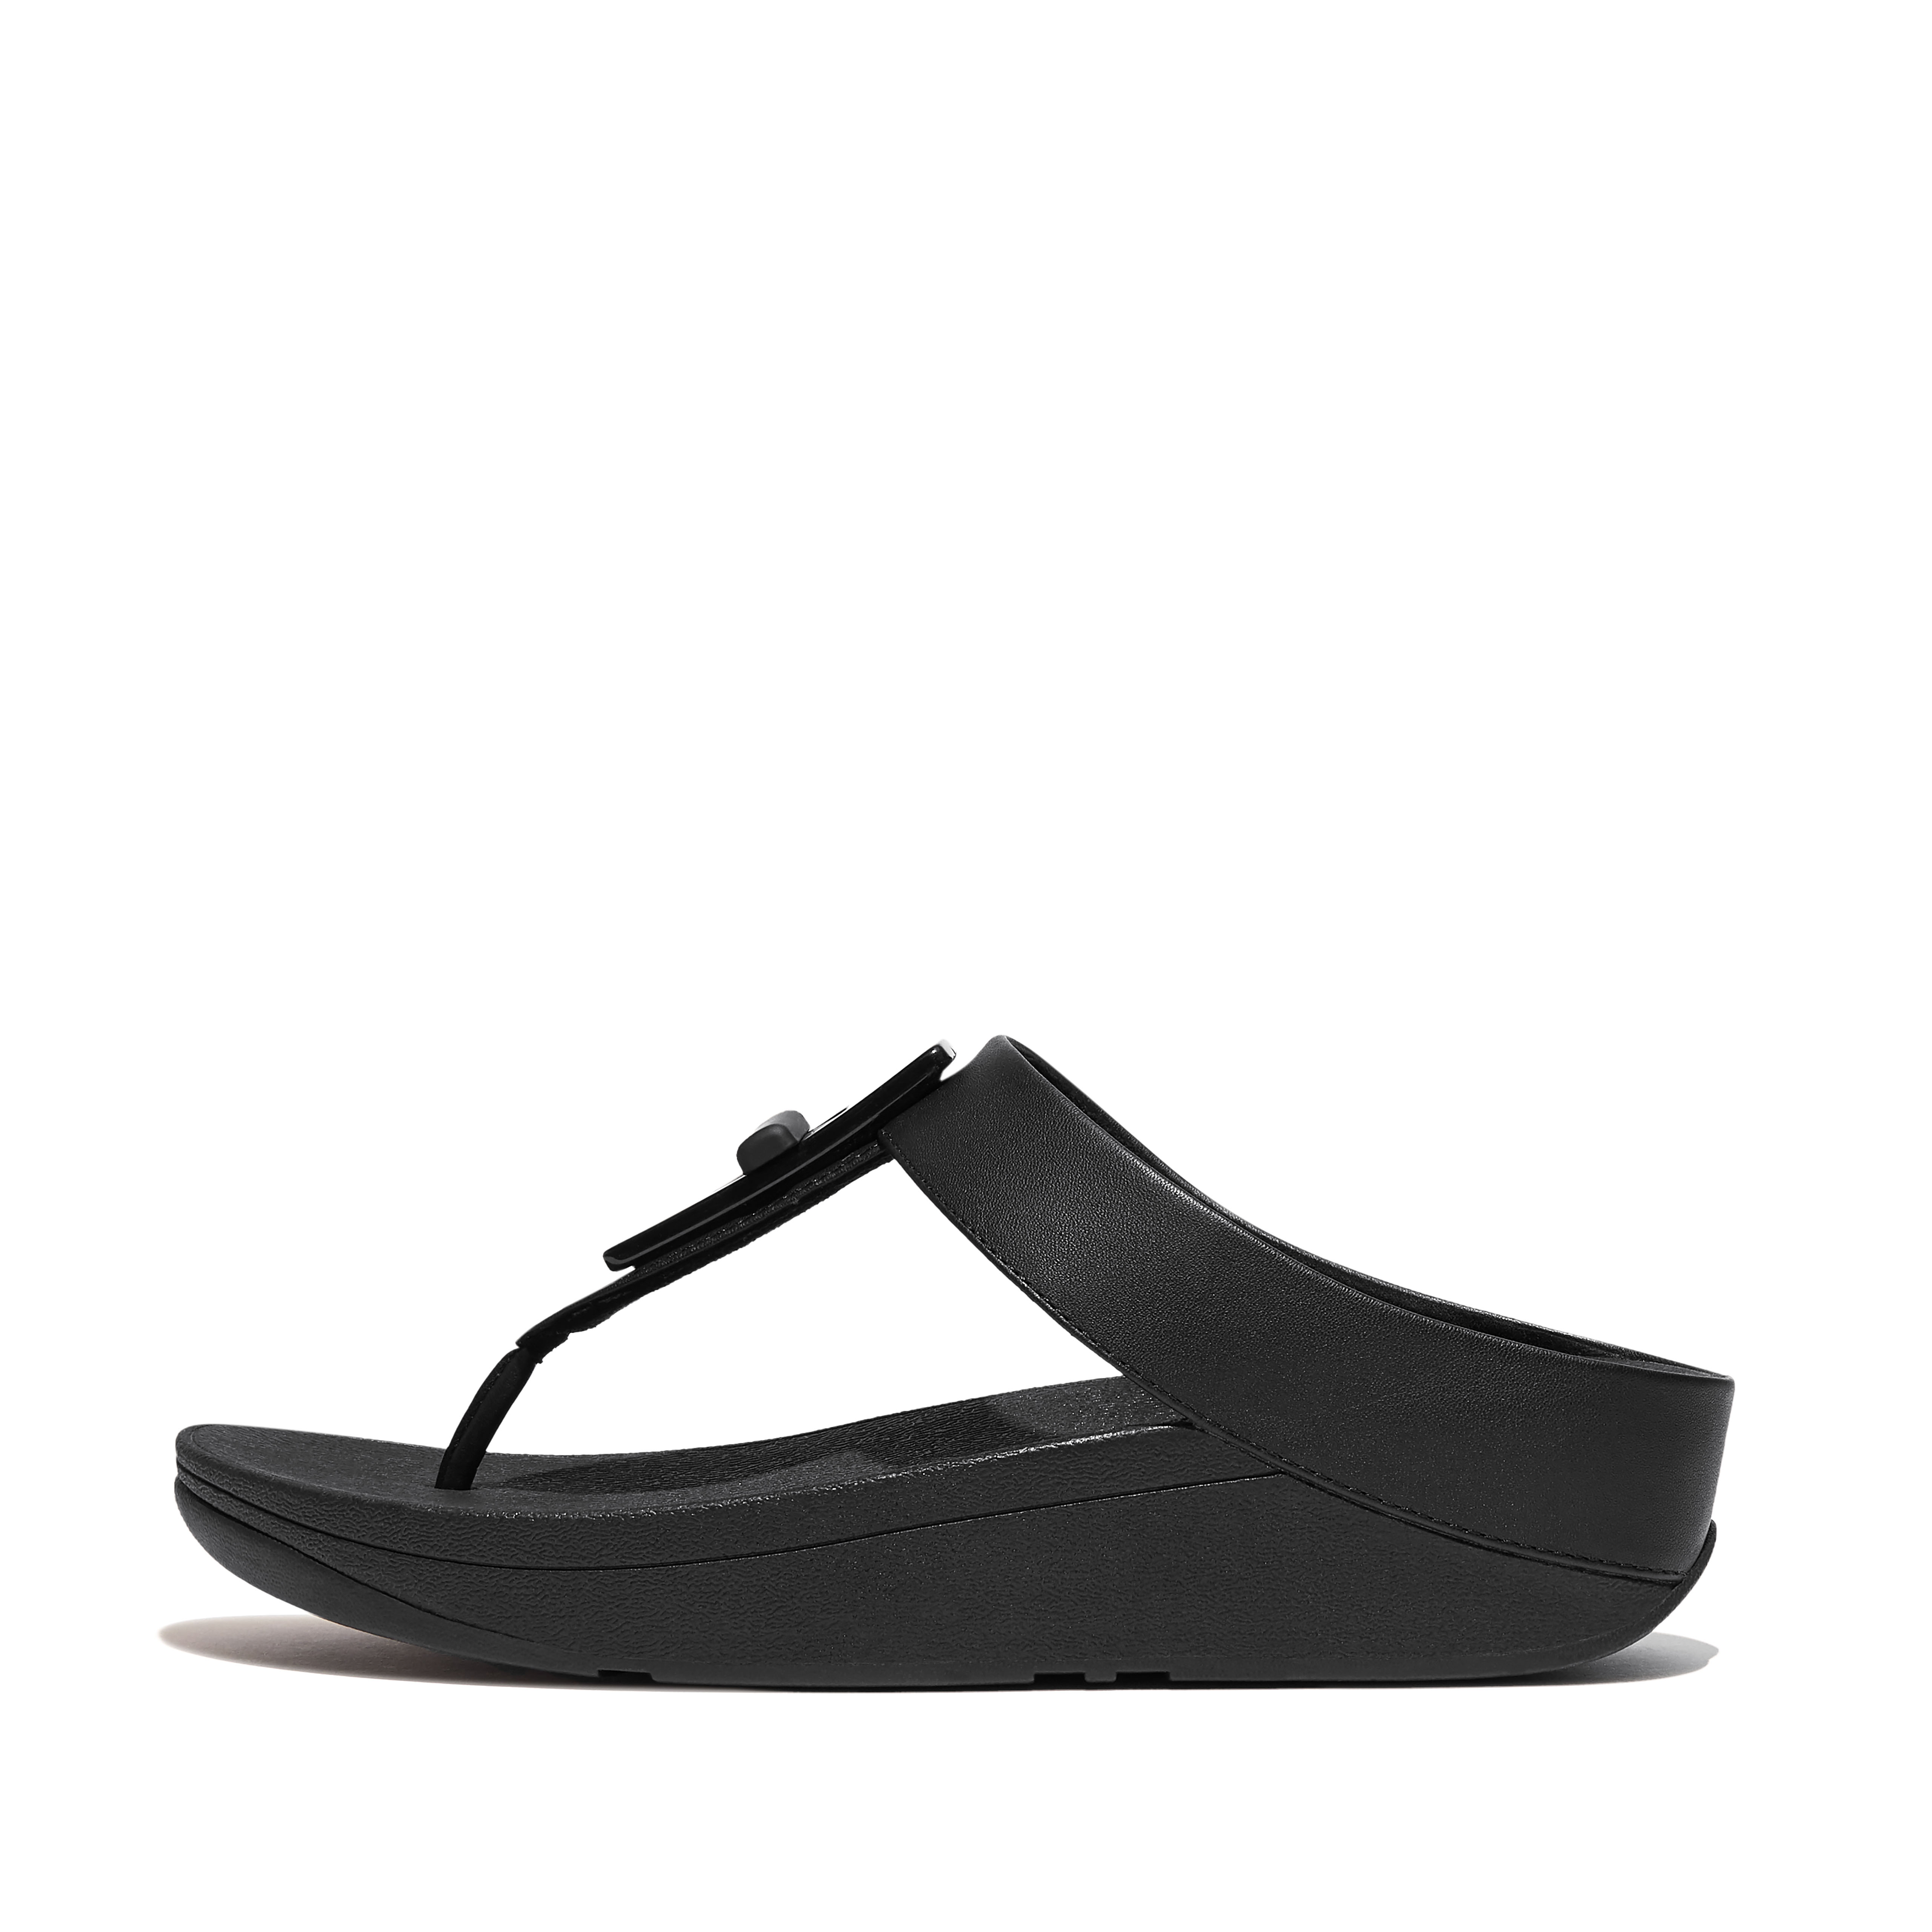 FINO Women's Resin-Lock Leather Toe-Post Sandals - Black (GQ1-001)